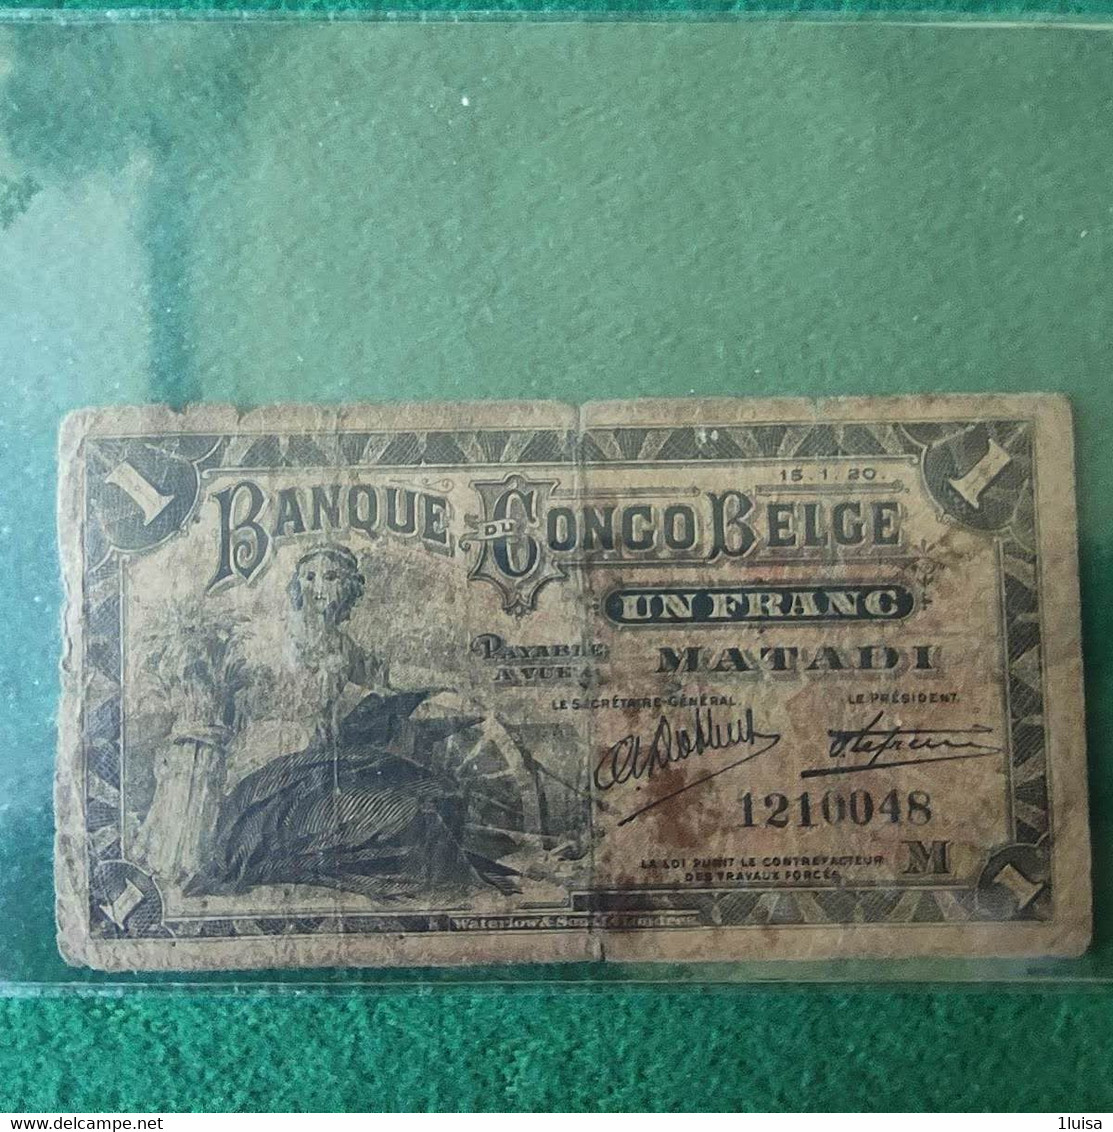 CONGO BELGA 1 FRANC 1920 - Belgian Congo Bank